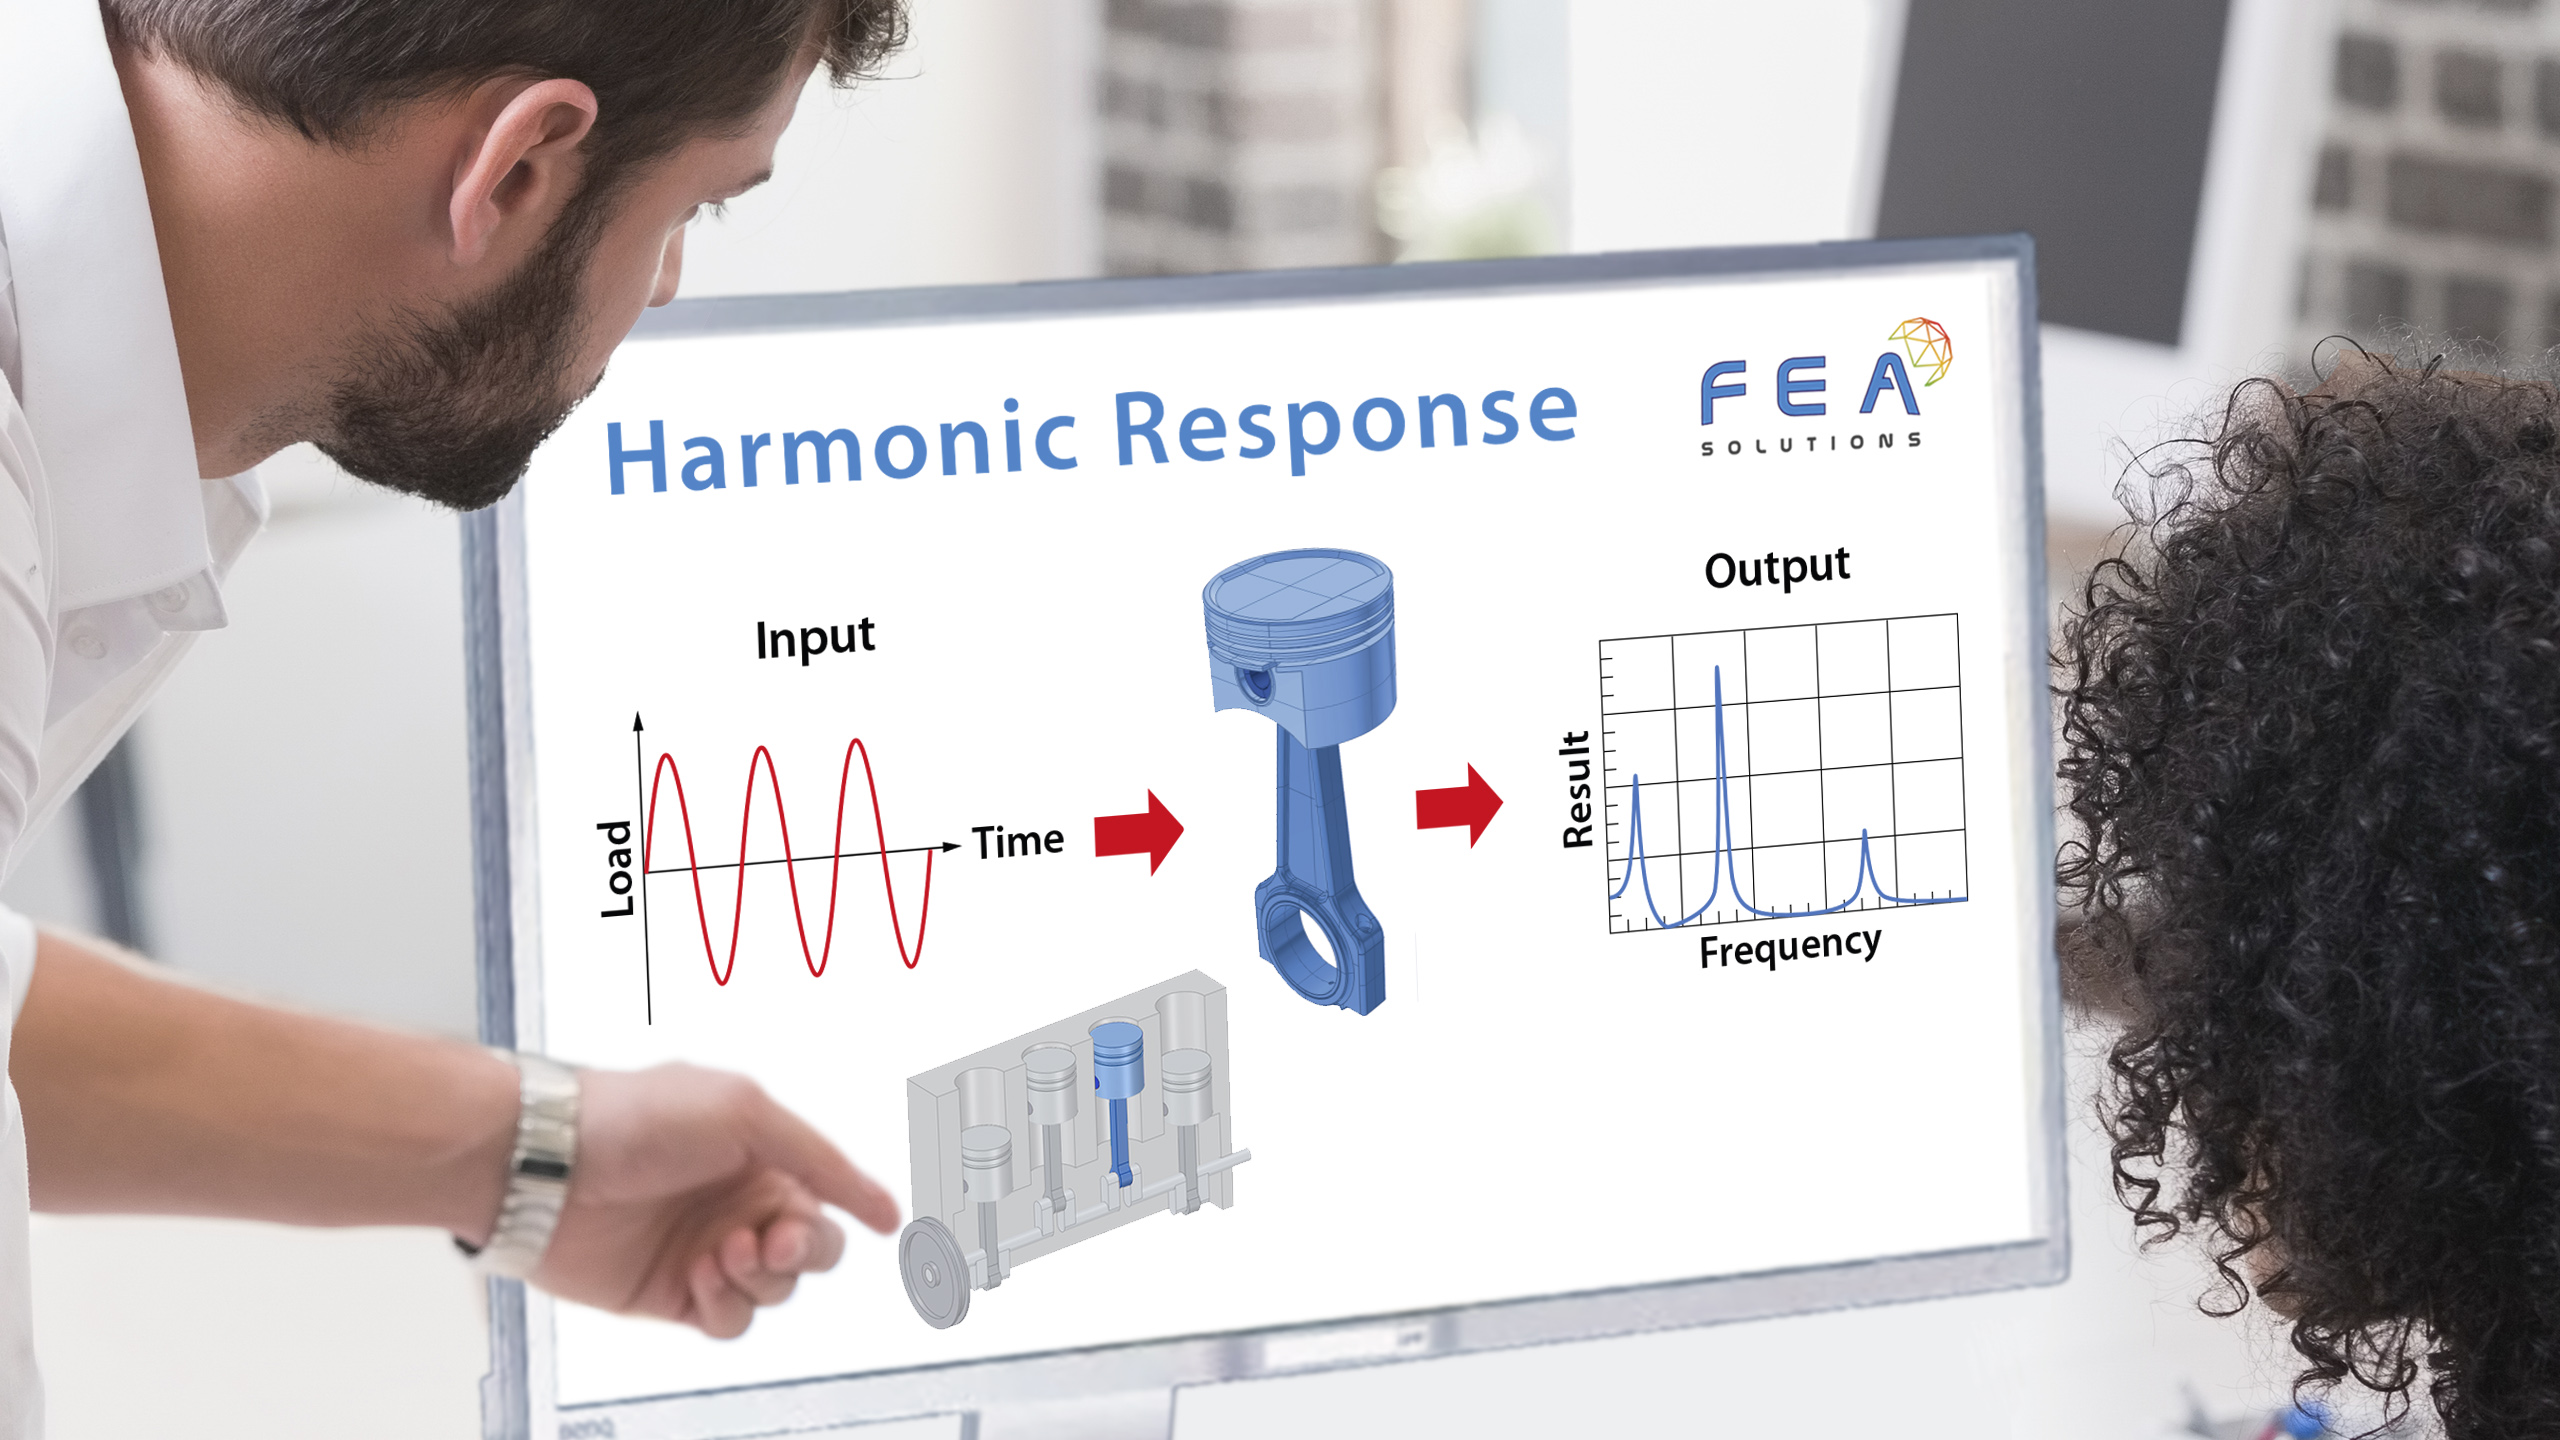 harmonic response analysis infographic